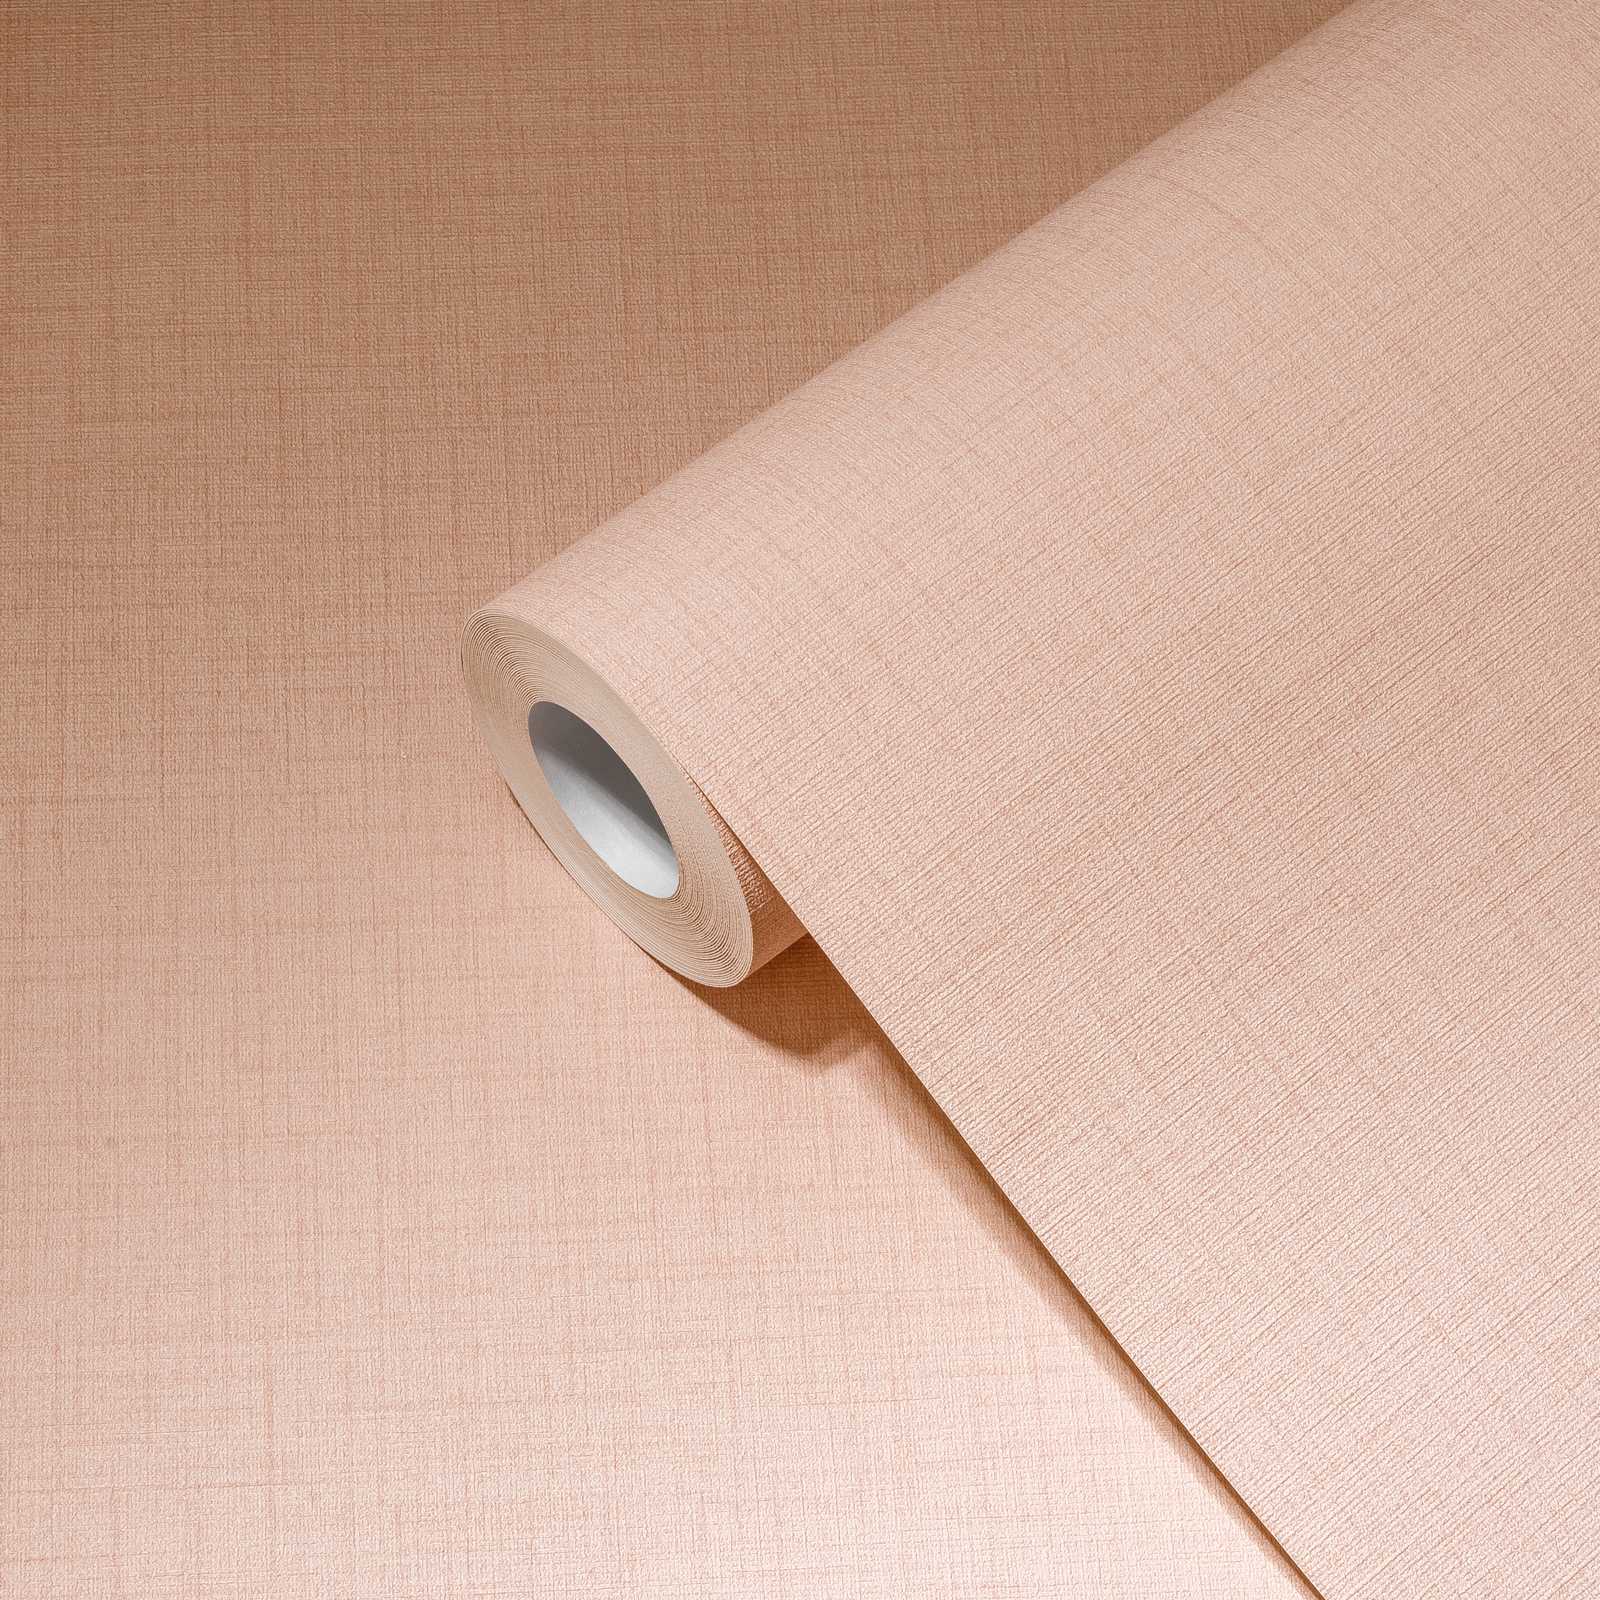             Pale pink wallpaper plain with linen texture - pink
        